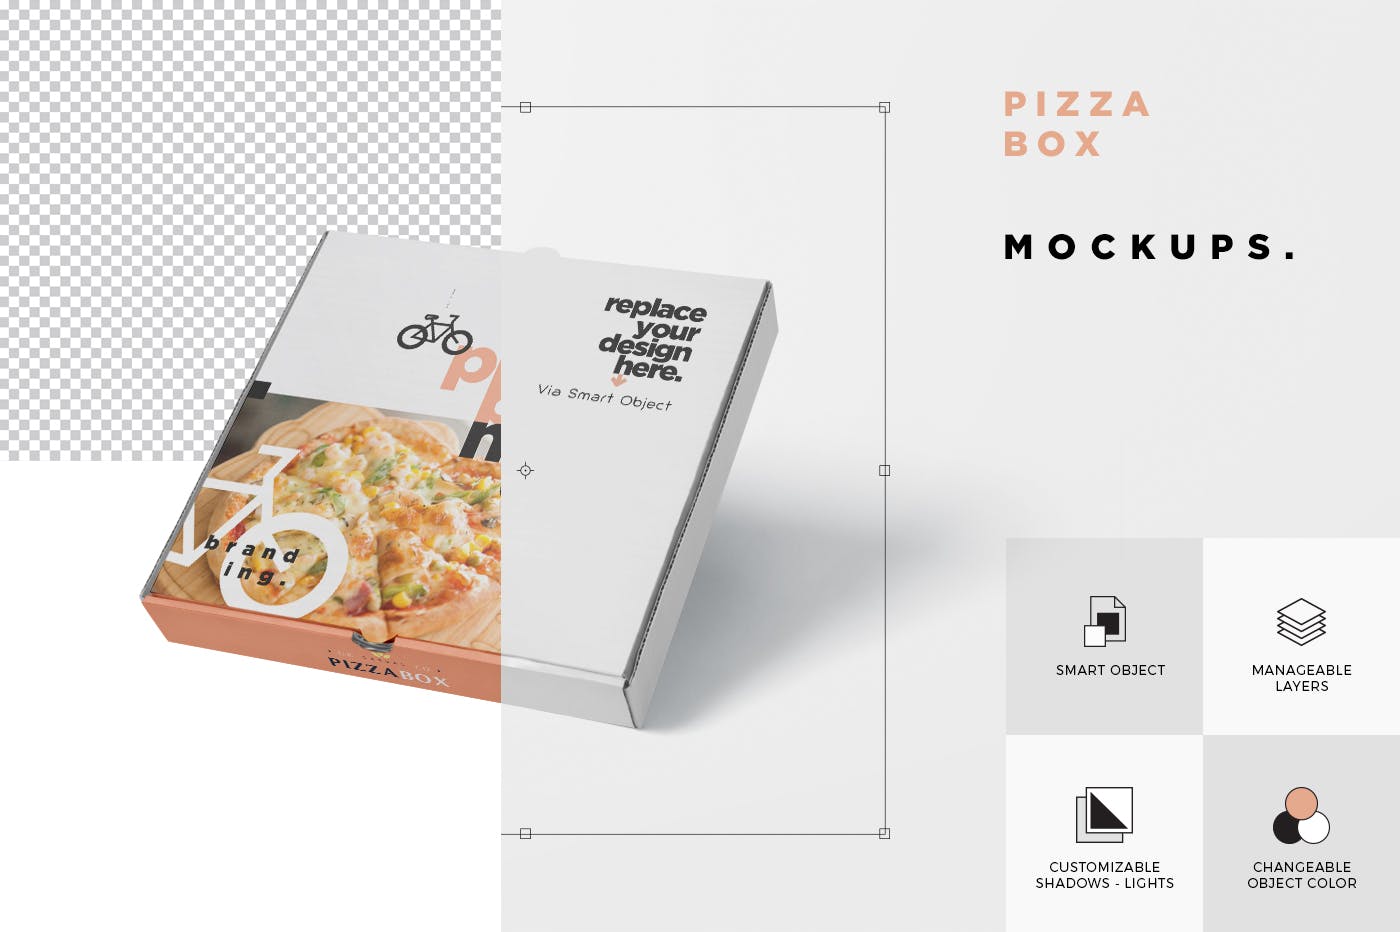 披萨外带包装纸盒设计图样机 Pizza Box Mock-Up – Grocery Store Edition插图(5)